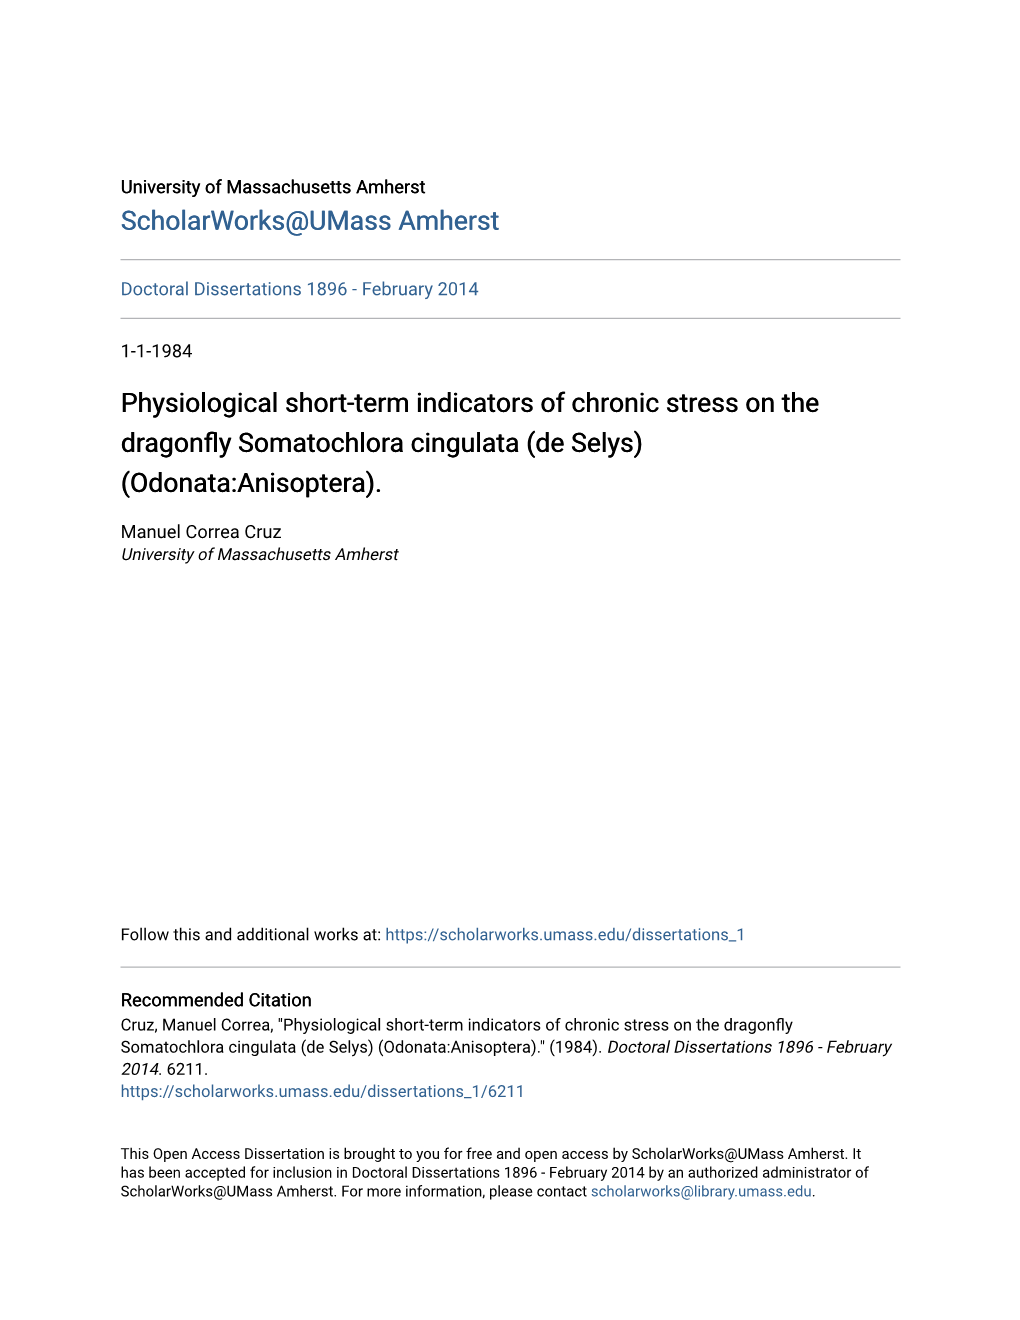 Physiological Short-Term Indicators of Chronic Stress on the Dragonfly Somatochlora Cingulata (De Selys) (Odonata:Anisoptera)